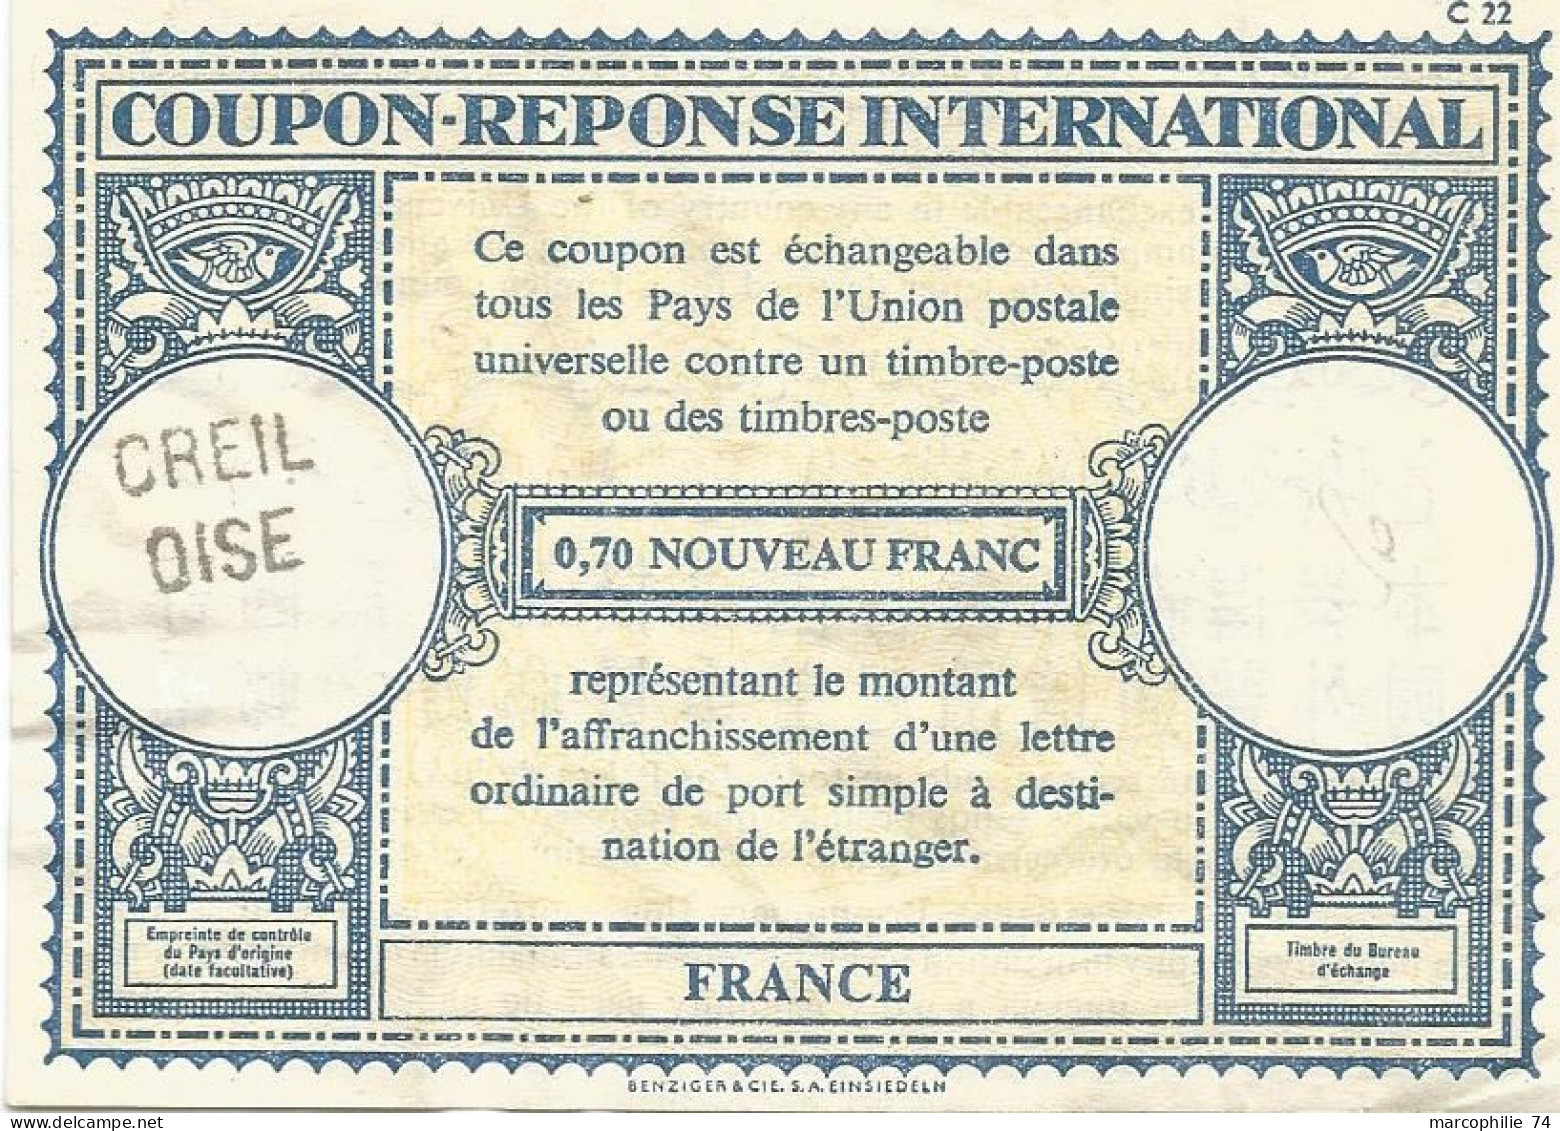 COUPON REPONSE INTERNATIONAL FRANCE 0.70 NOUVEAU FRANC GRIFFE CREIL OISE - Antwoordbons